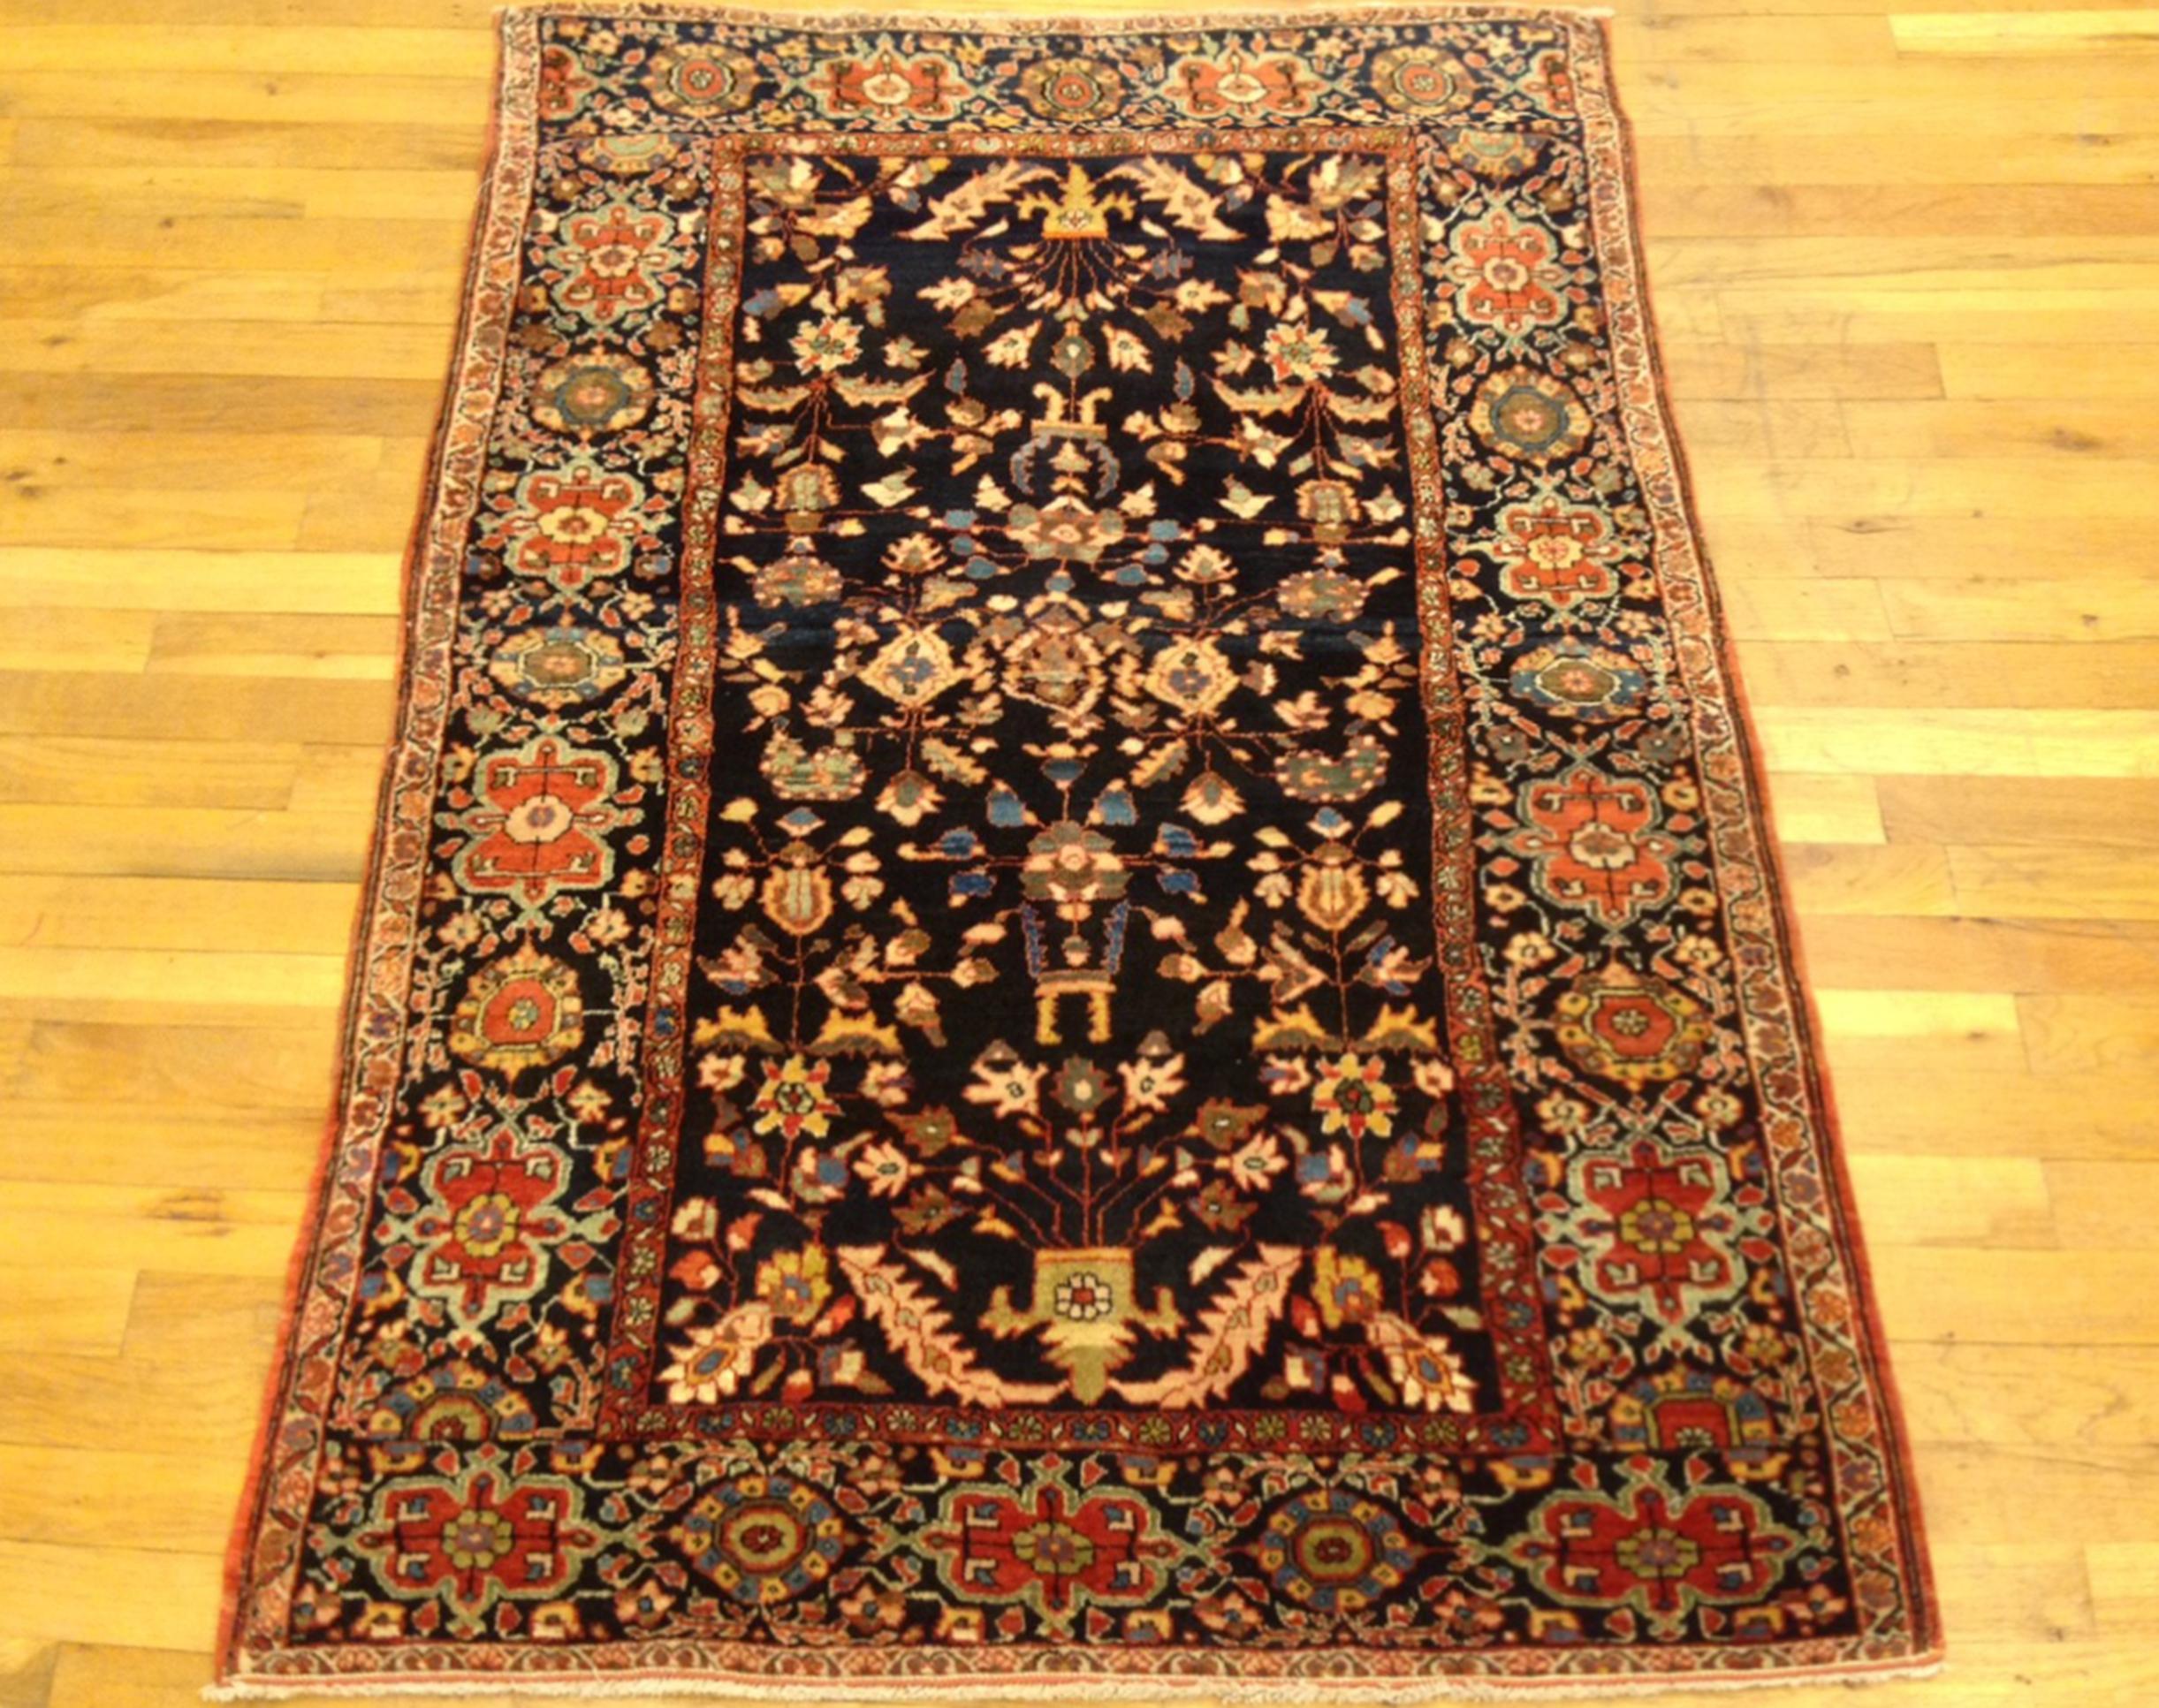 Antique Ferahan Sarouk Oriental rug, circa 1910, Small size

An antique Ferahan Sarouk oriental rug, size 4'7